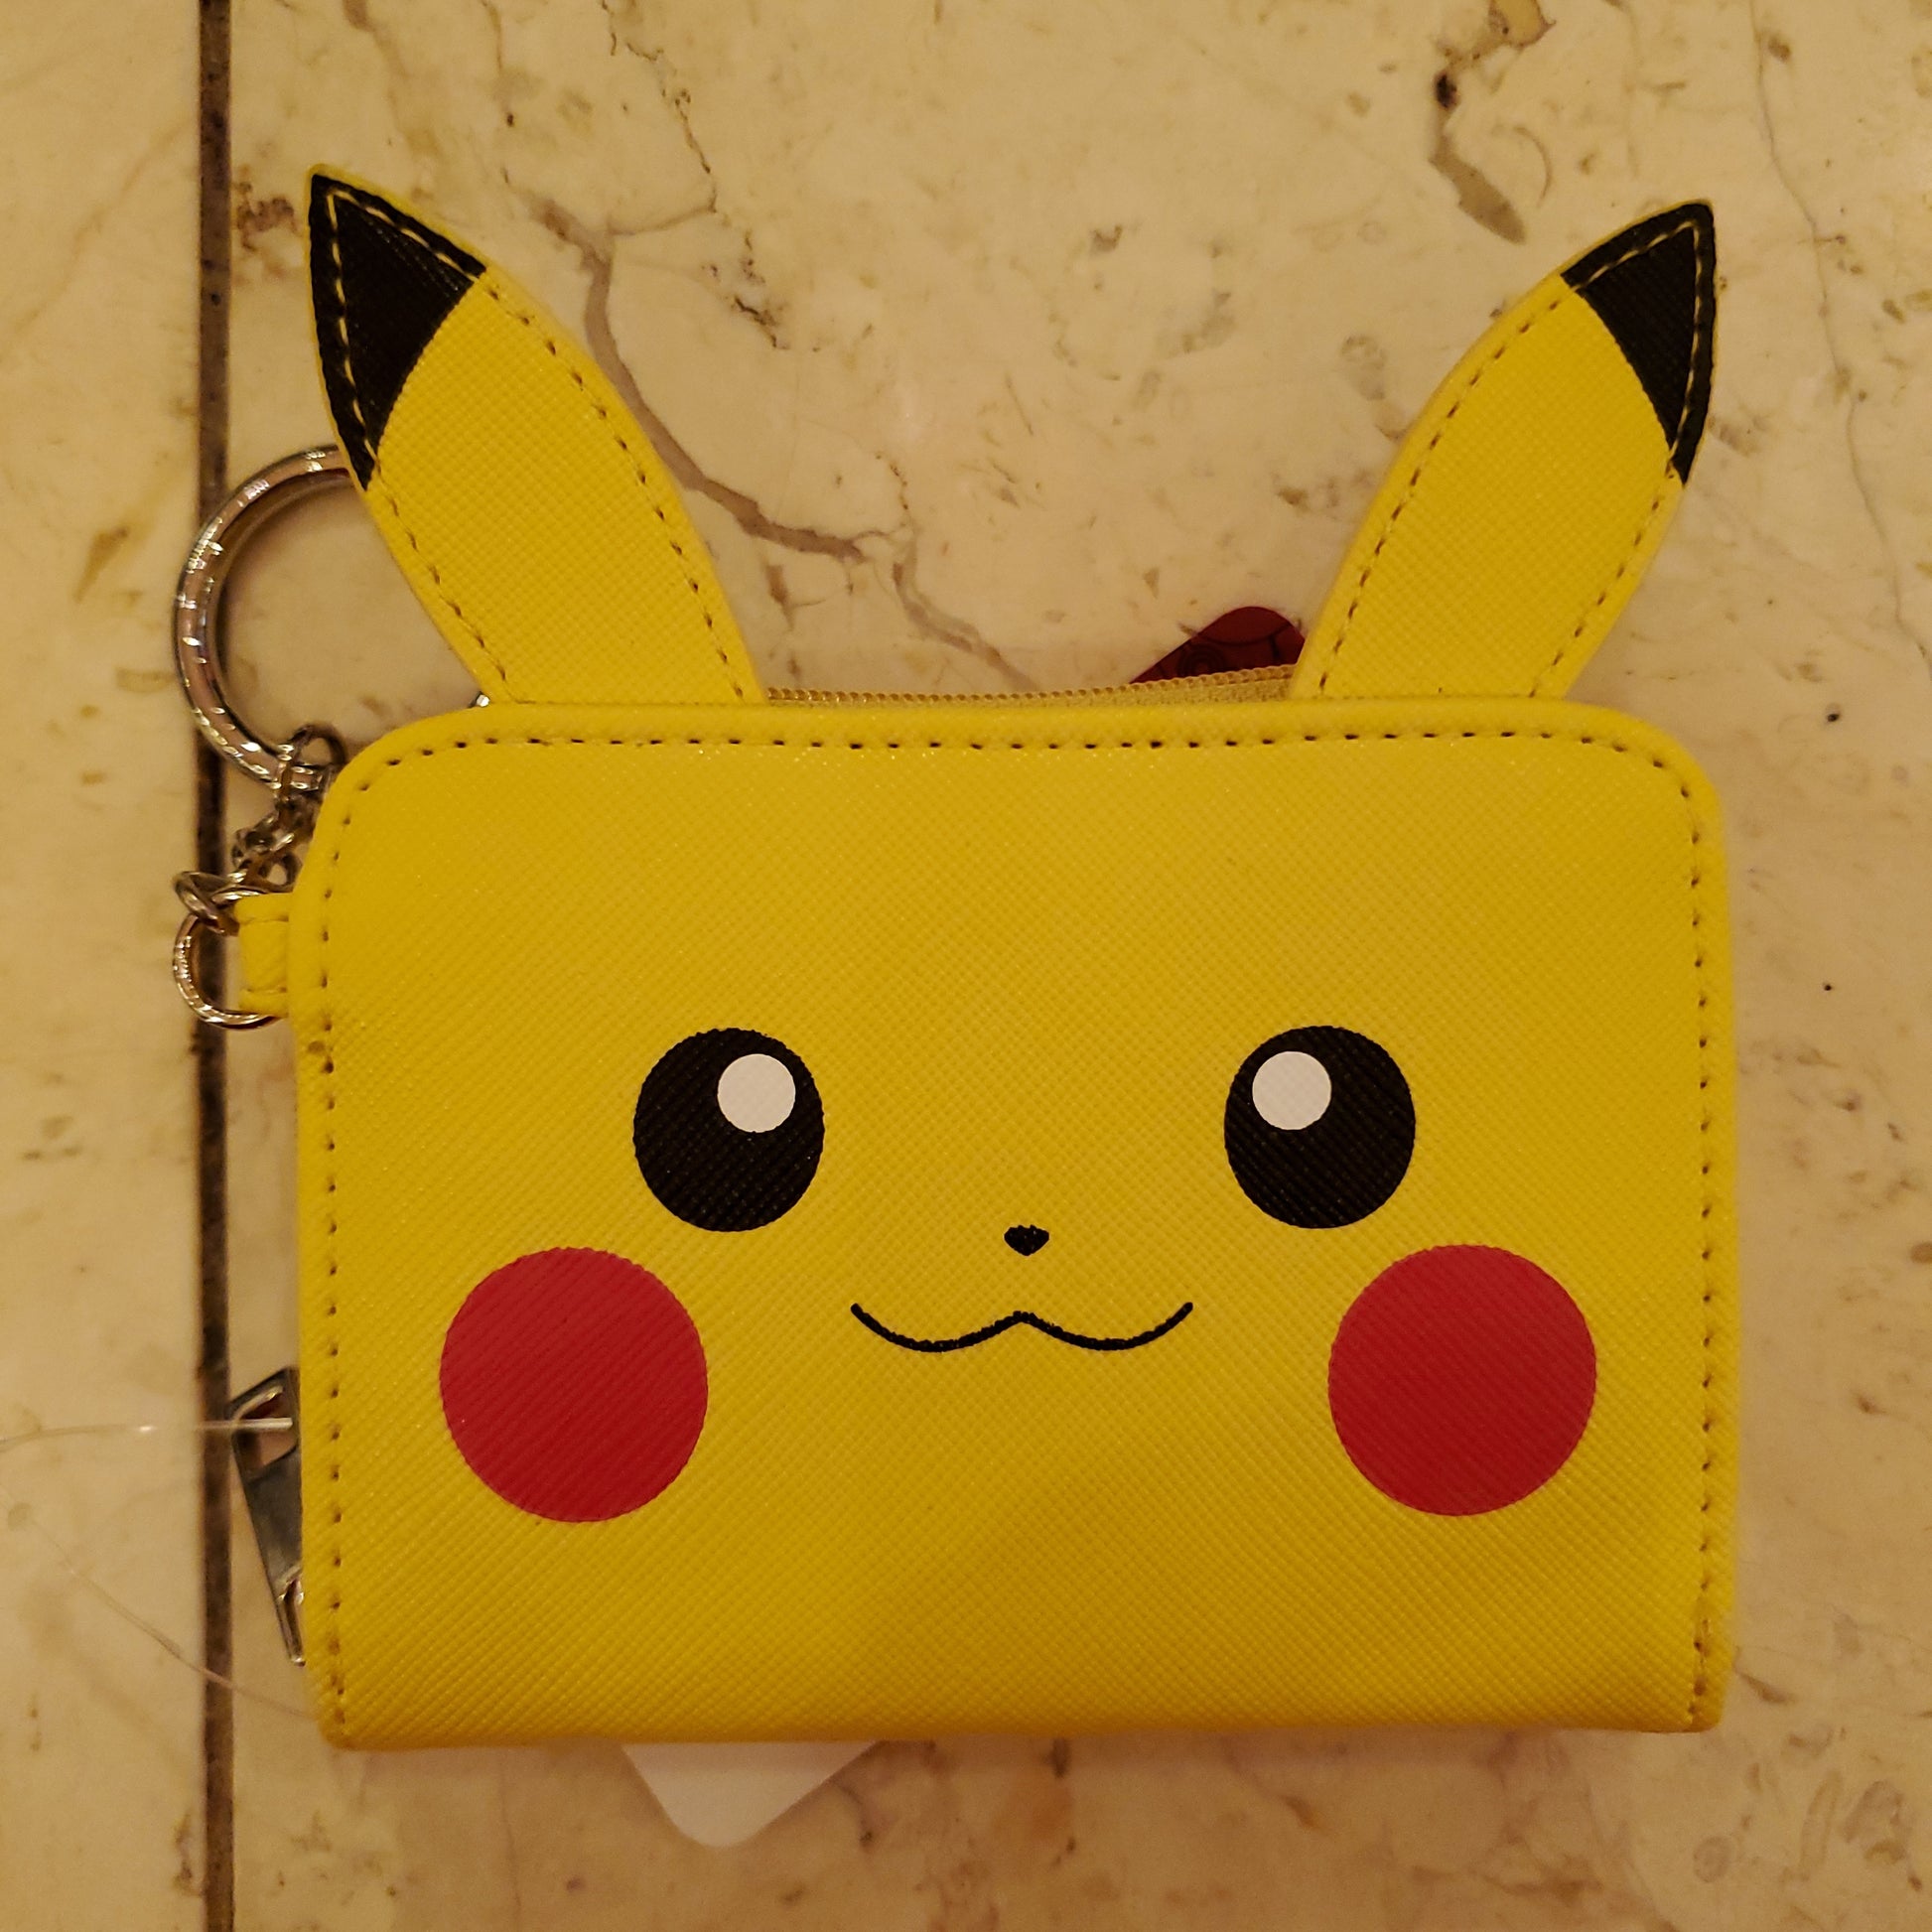 Loungefly Pokemon Pikachu and Friends Zip Around Wallet